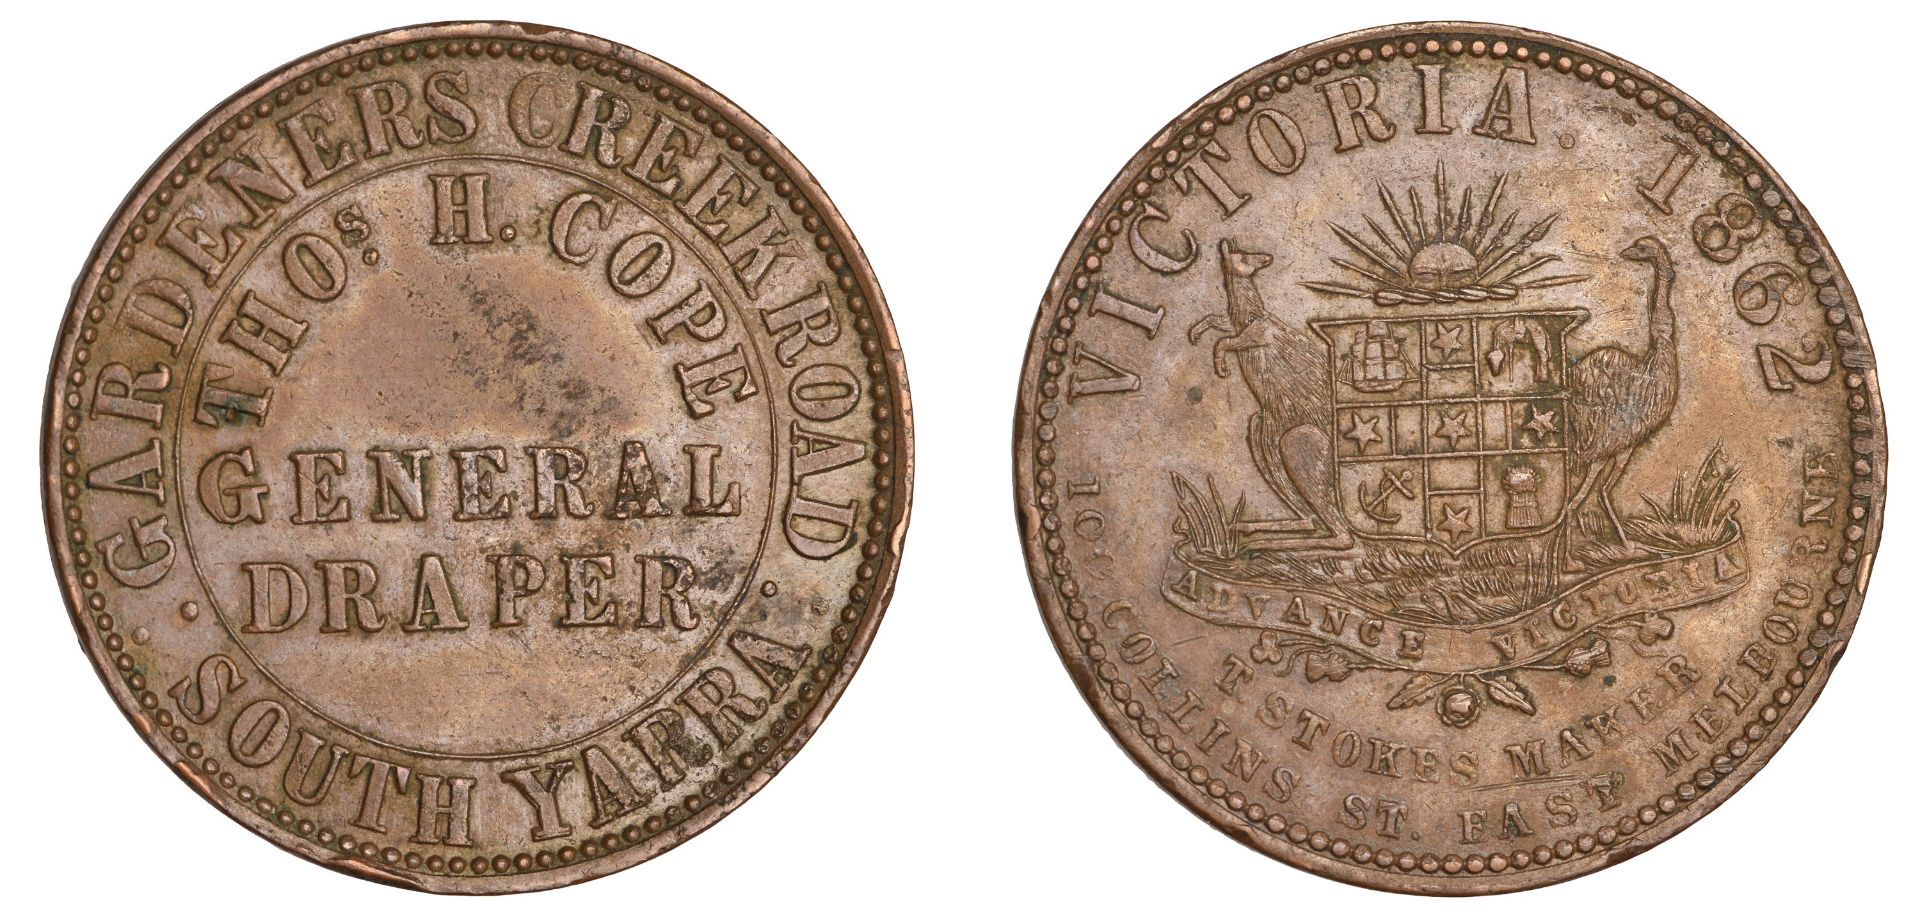 Australia, Victoria, SOUTH YARRA, Thomas H. Cope, Penny, 1862 (G 49a; A 81). Minor edge knoc...